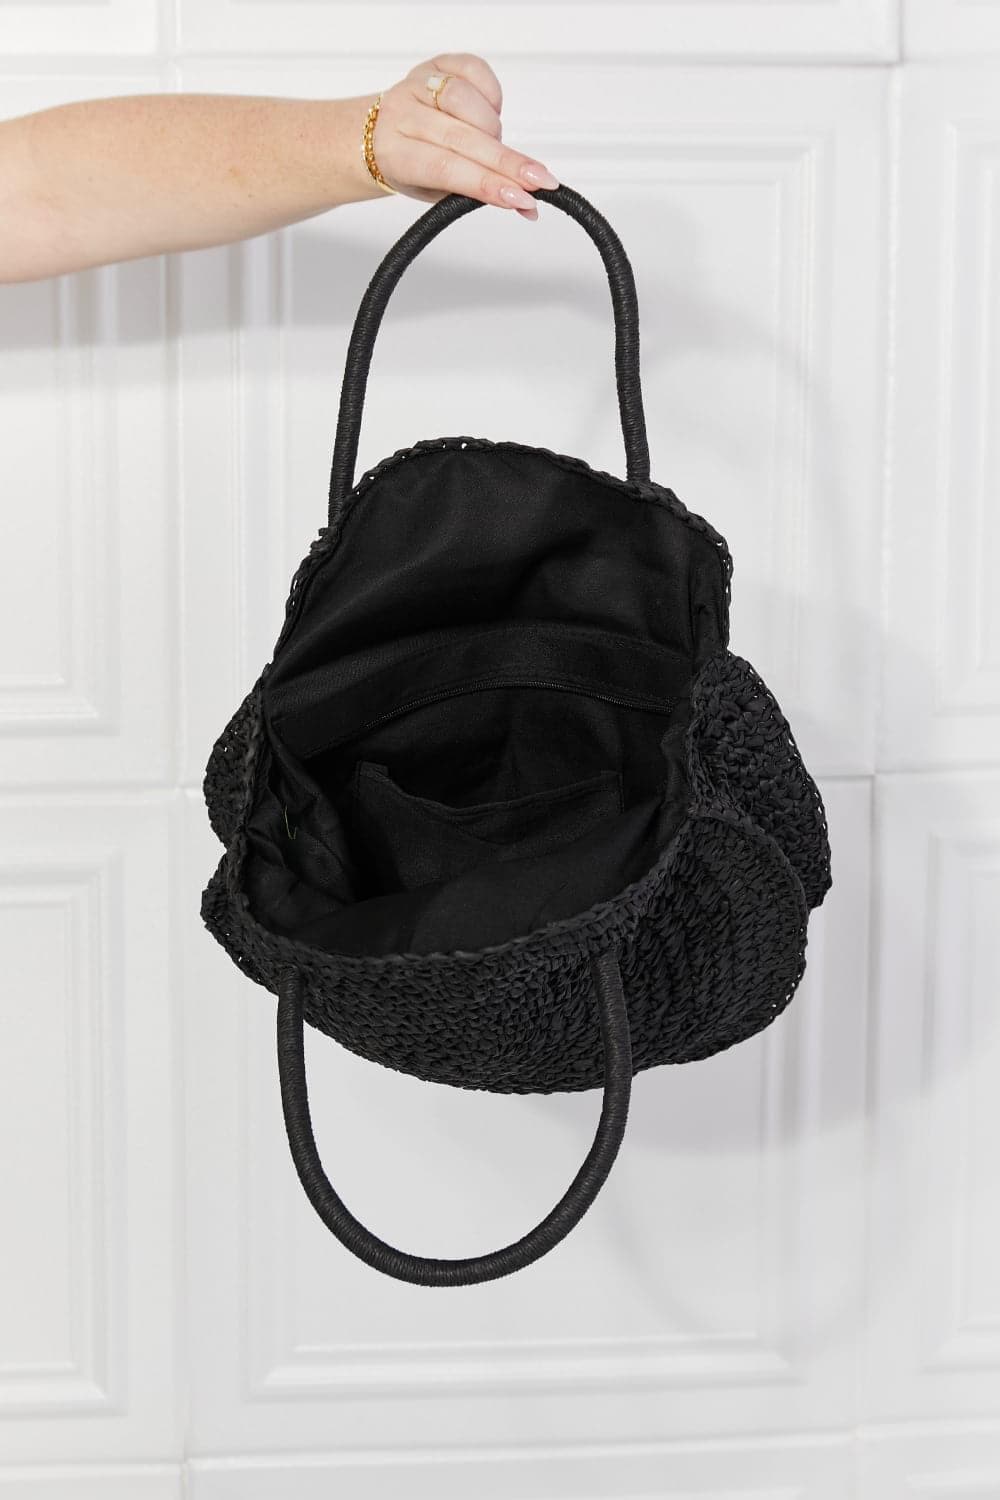 Justin Taylor Beach Date Straw Rattan Handbag in Black - SwagglyLife Home & Fashion